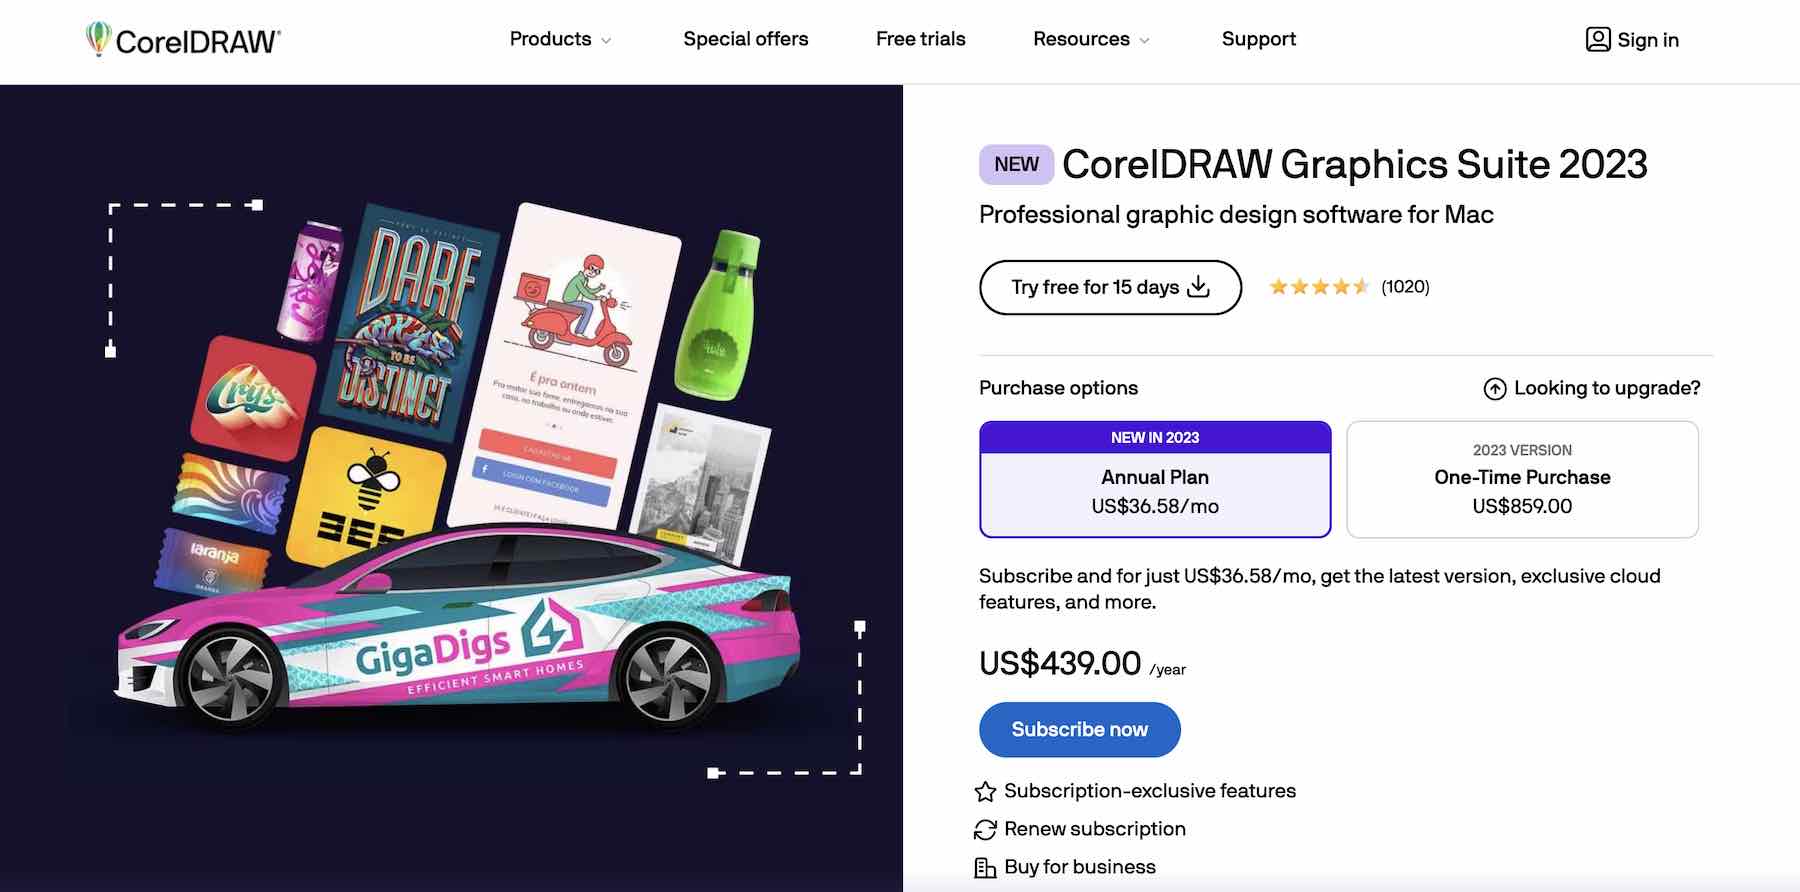 Скриншот веб-сайта CorelDRAW, показывающий тарифные планы